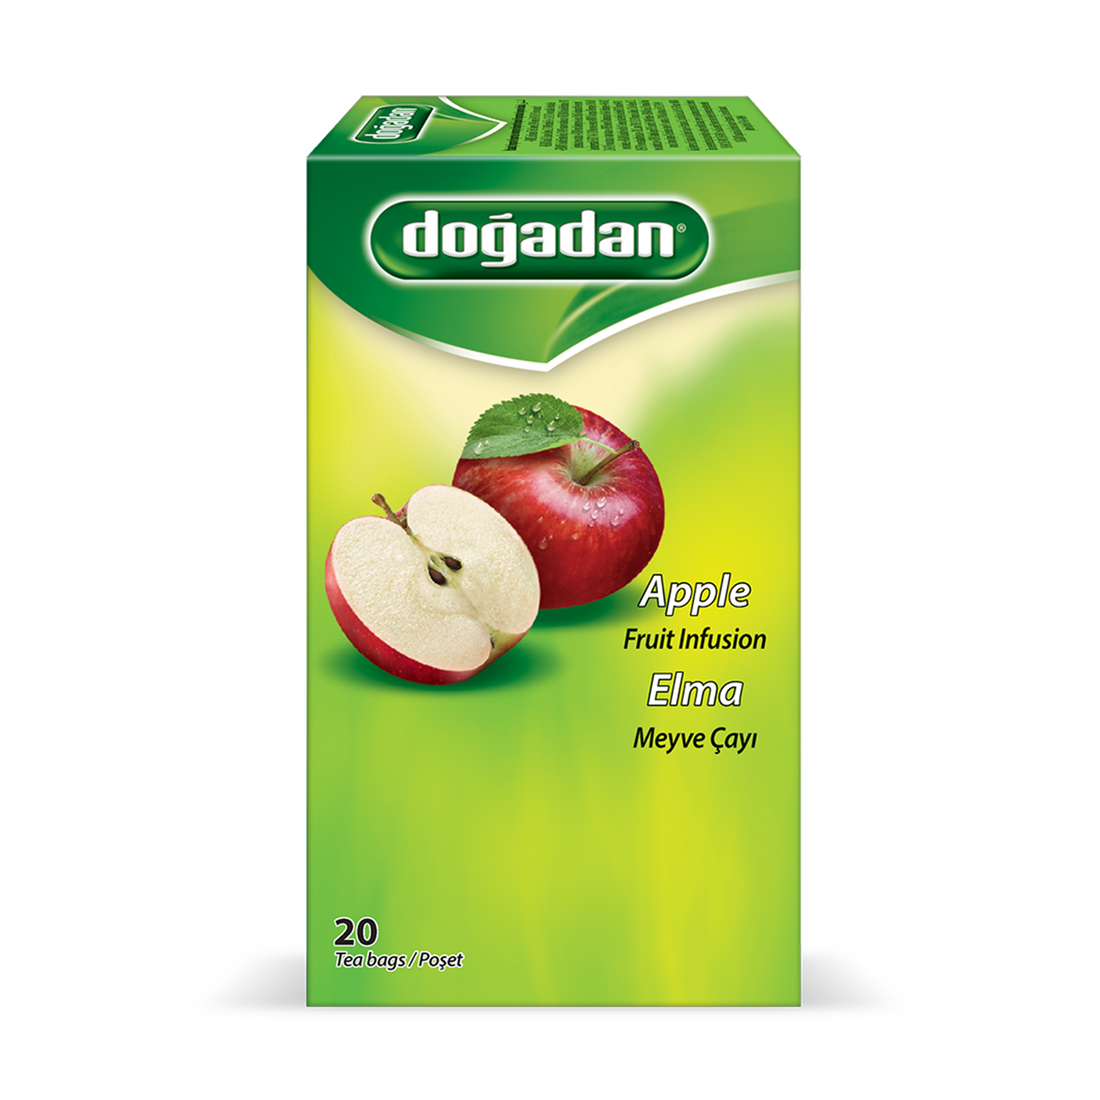 [Free Shipping] Dogal Support Set No.2 Dogadan 6 types of herbal tea + Earl Gray tea set